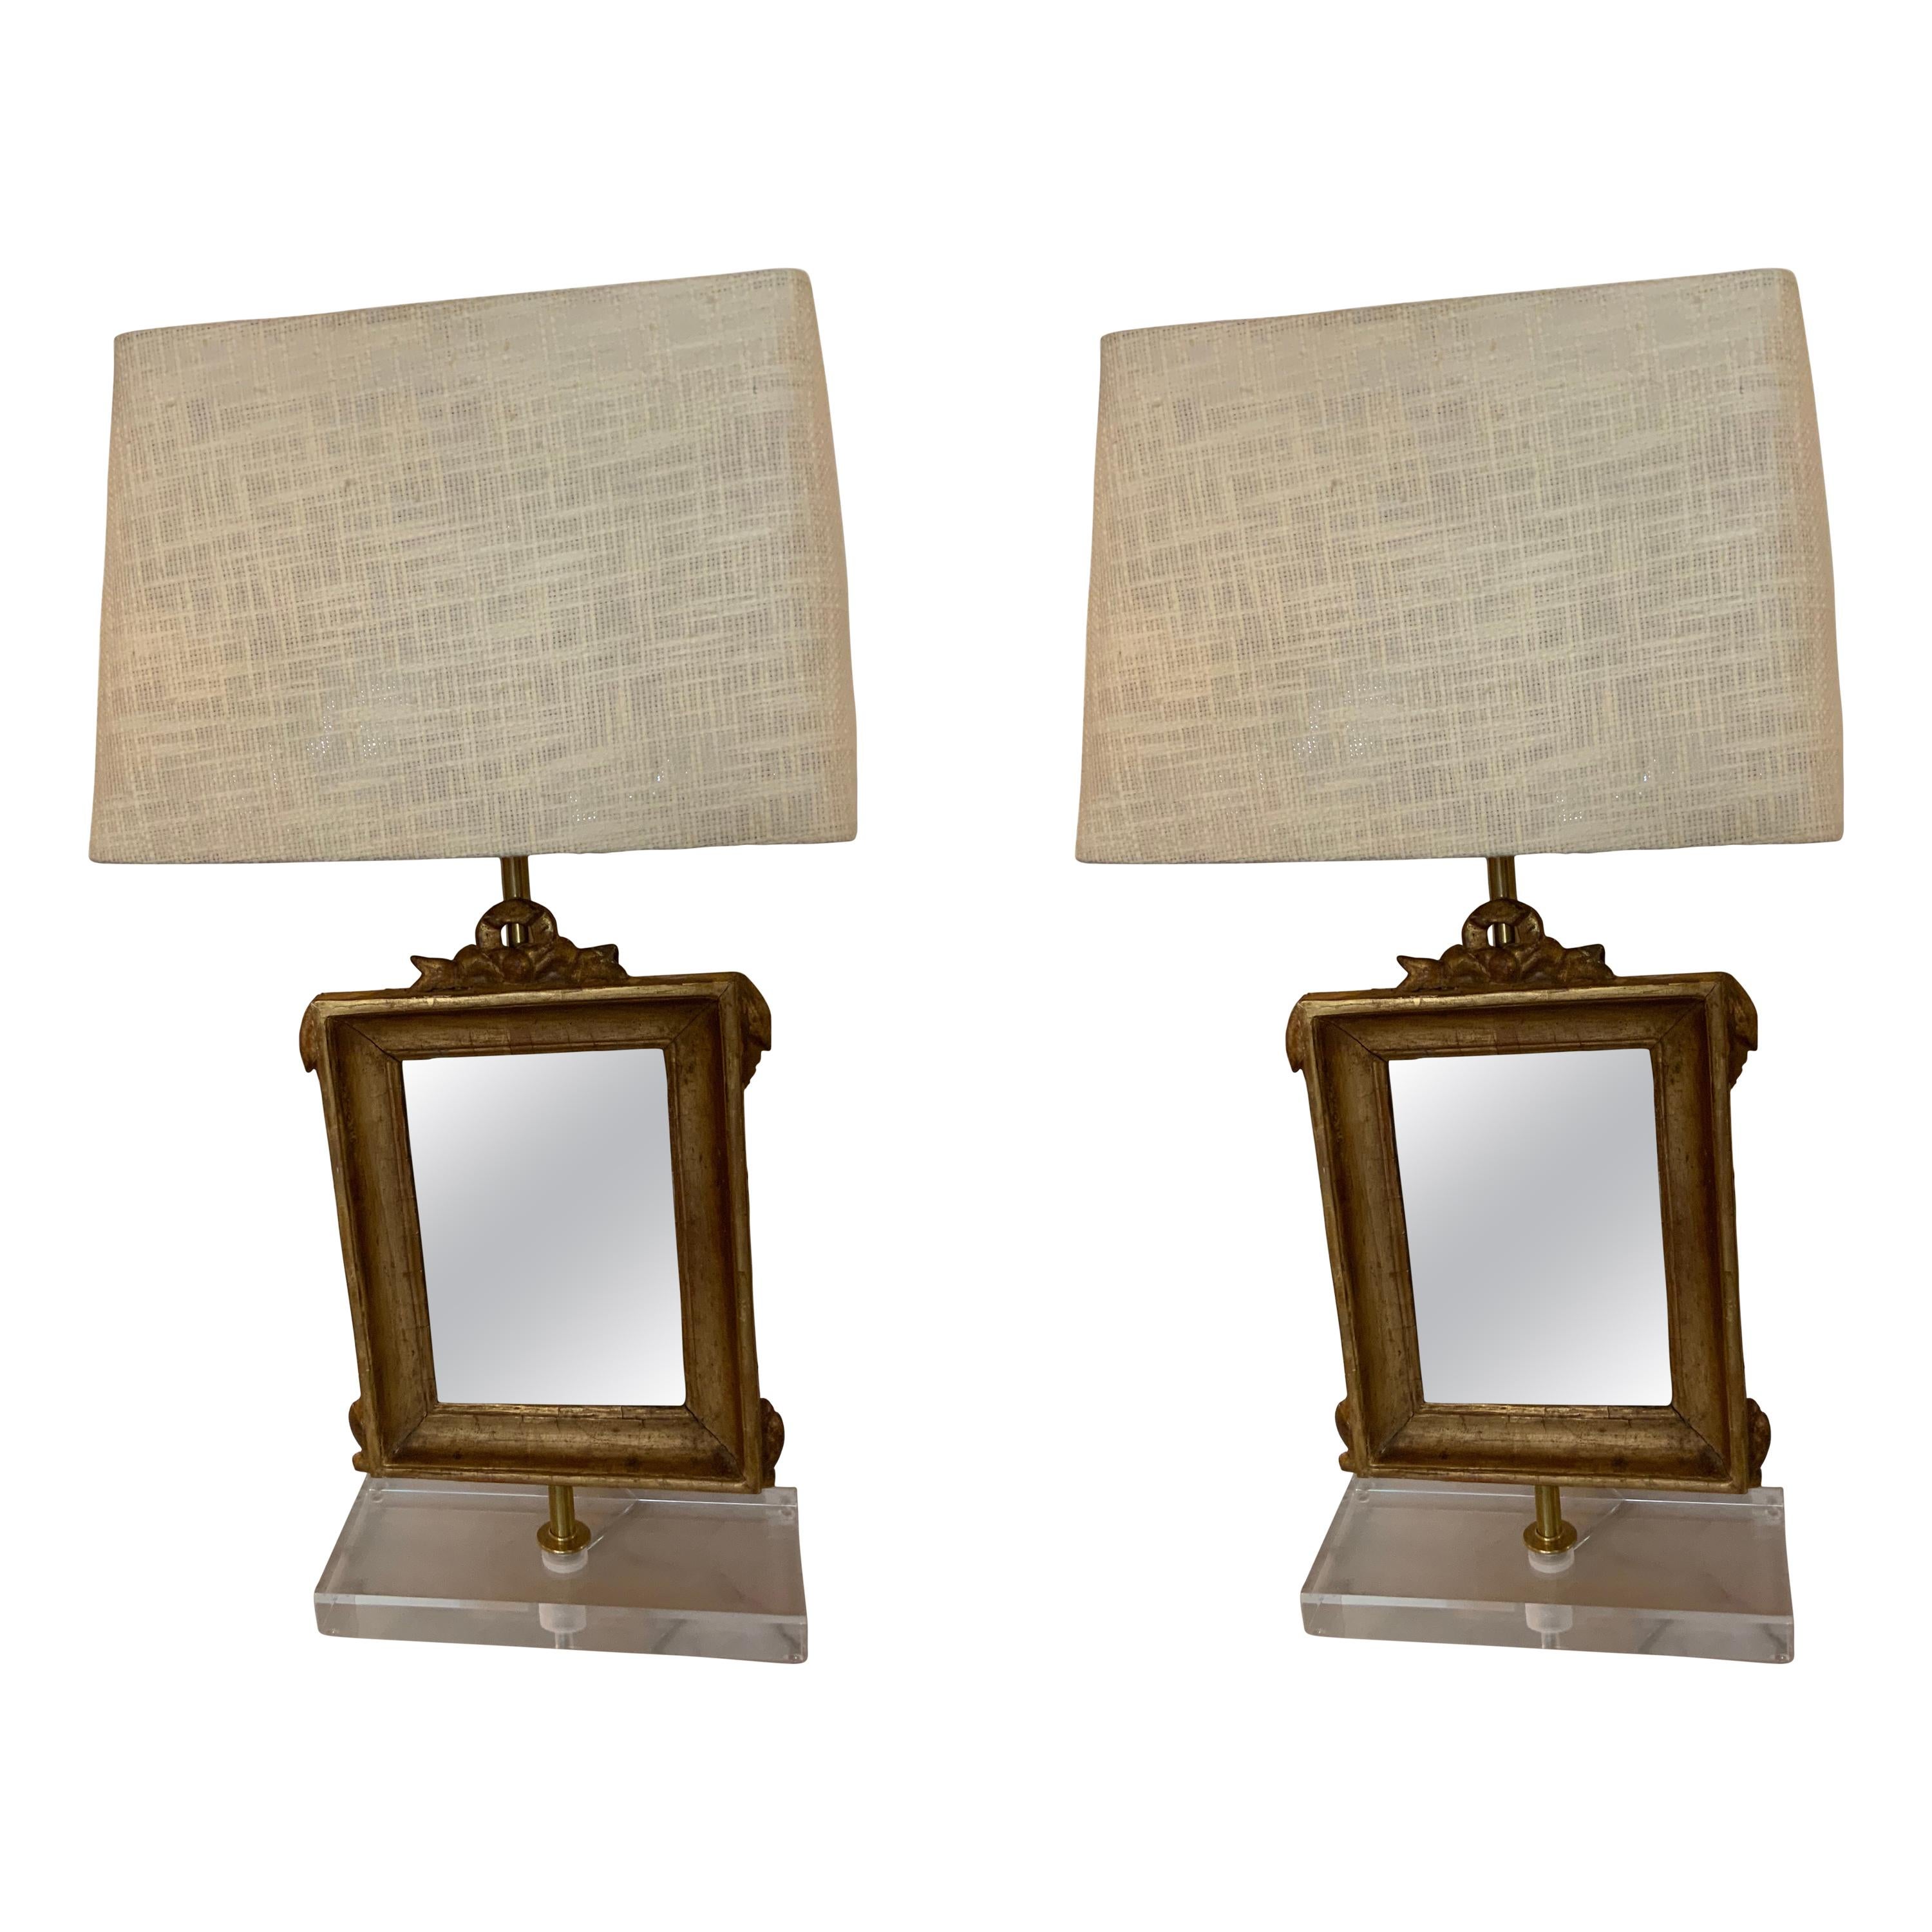 Paar Spiegel aus Giltwood (19. Jh.), montiert als Lampen auf Acrylsockeln